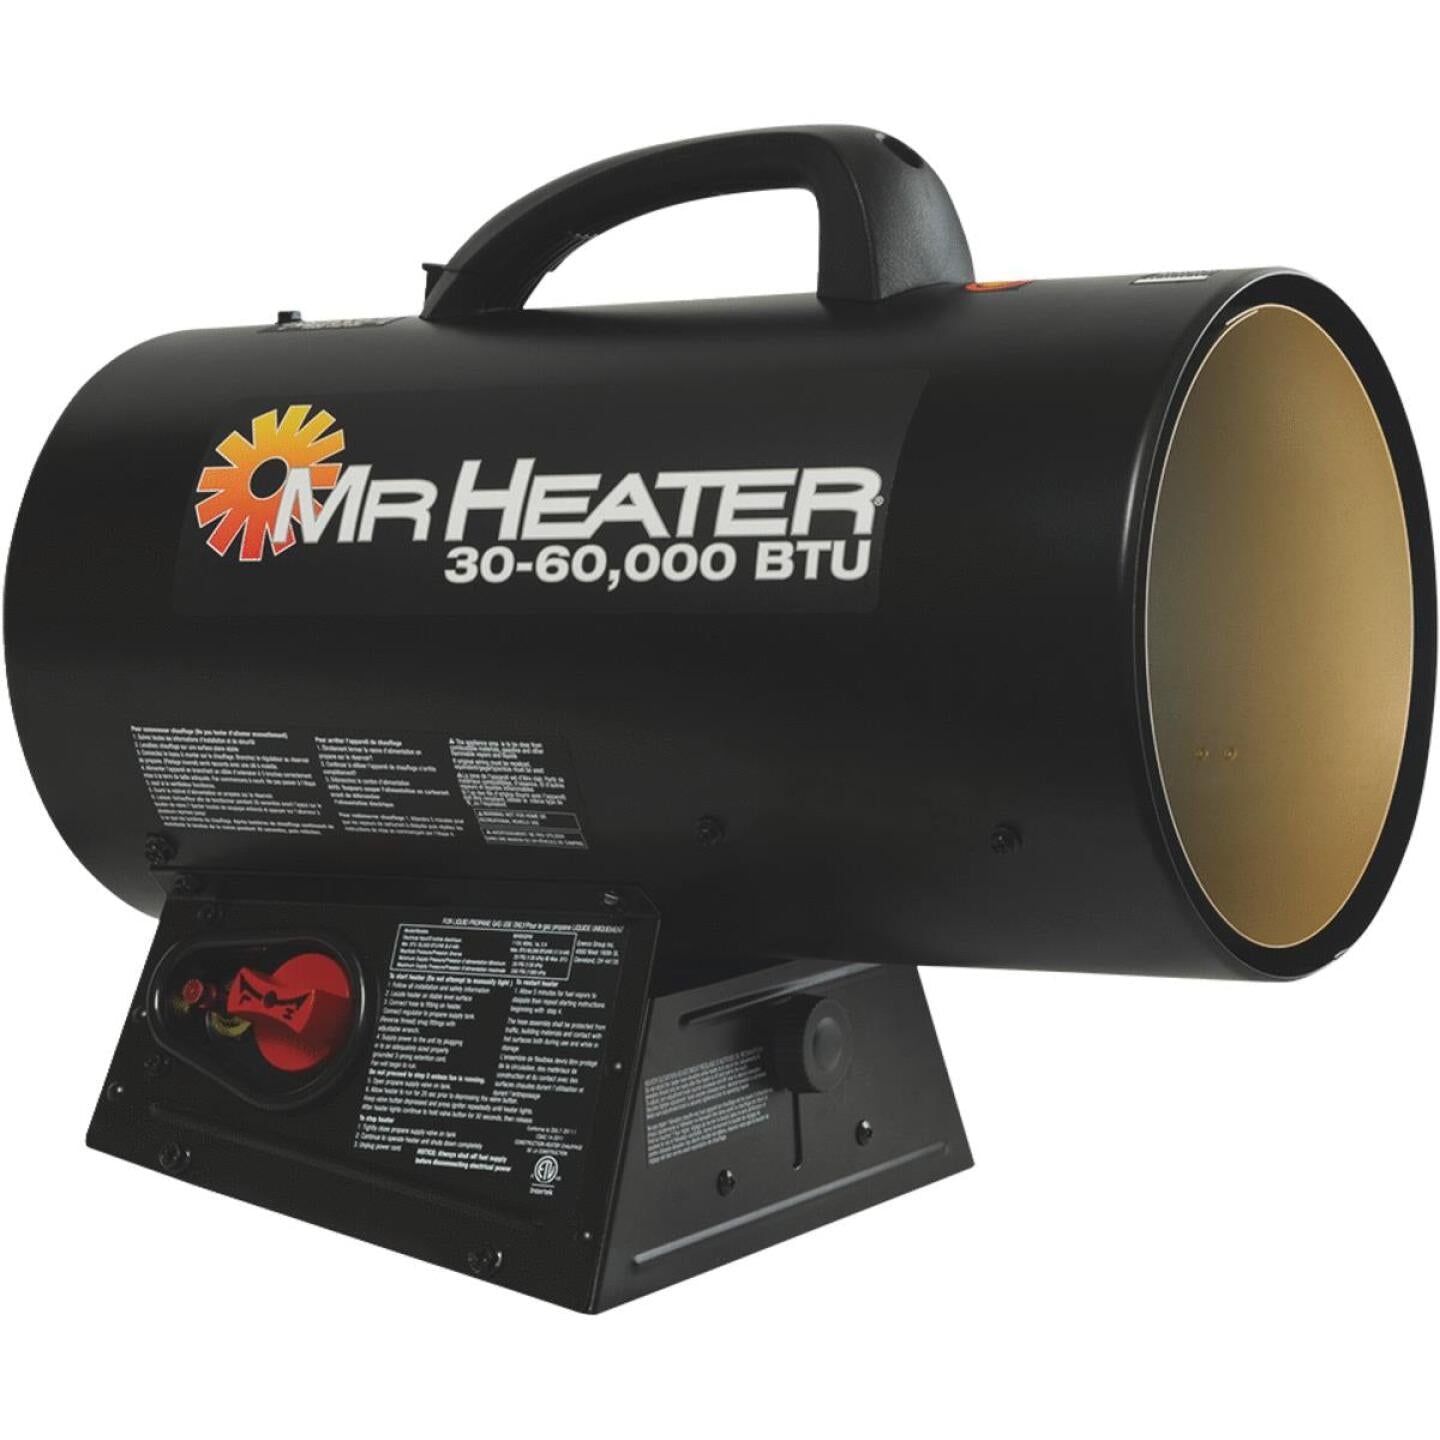 Mr. Heater, MR. HEATER 30-60,000 BTU Propane QBT Forced Air Heater